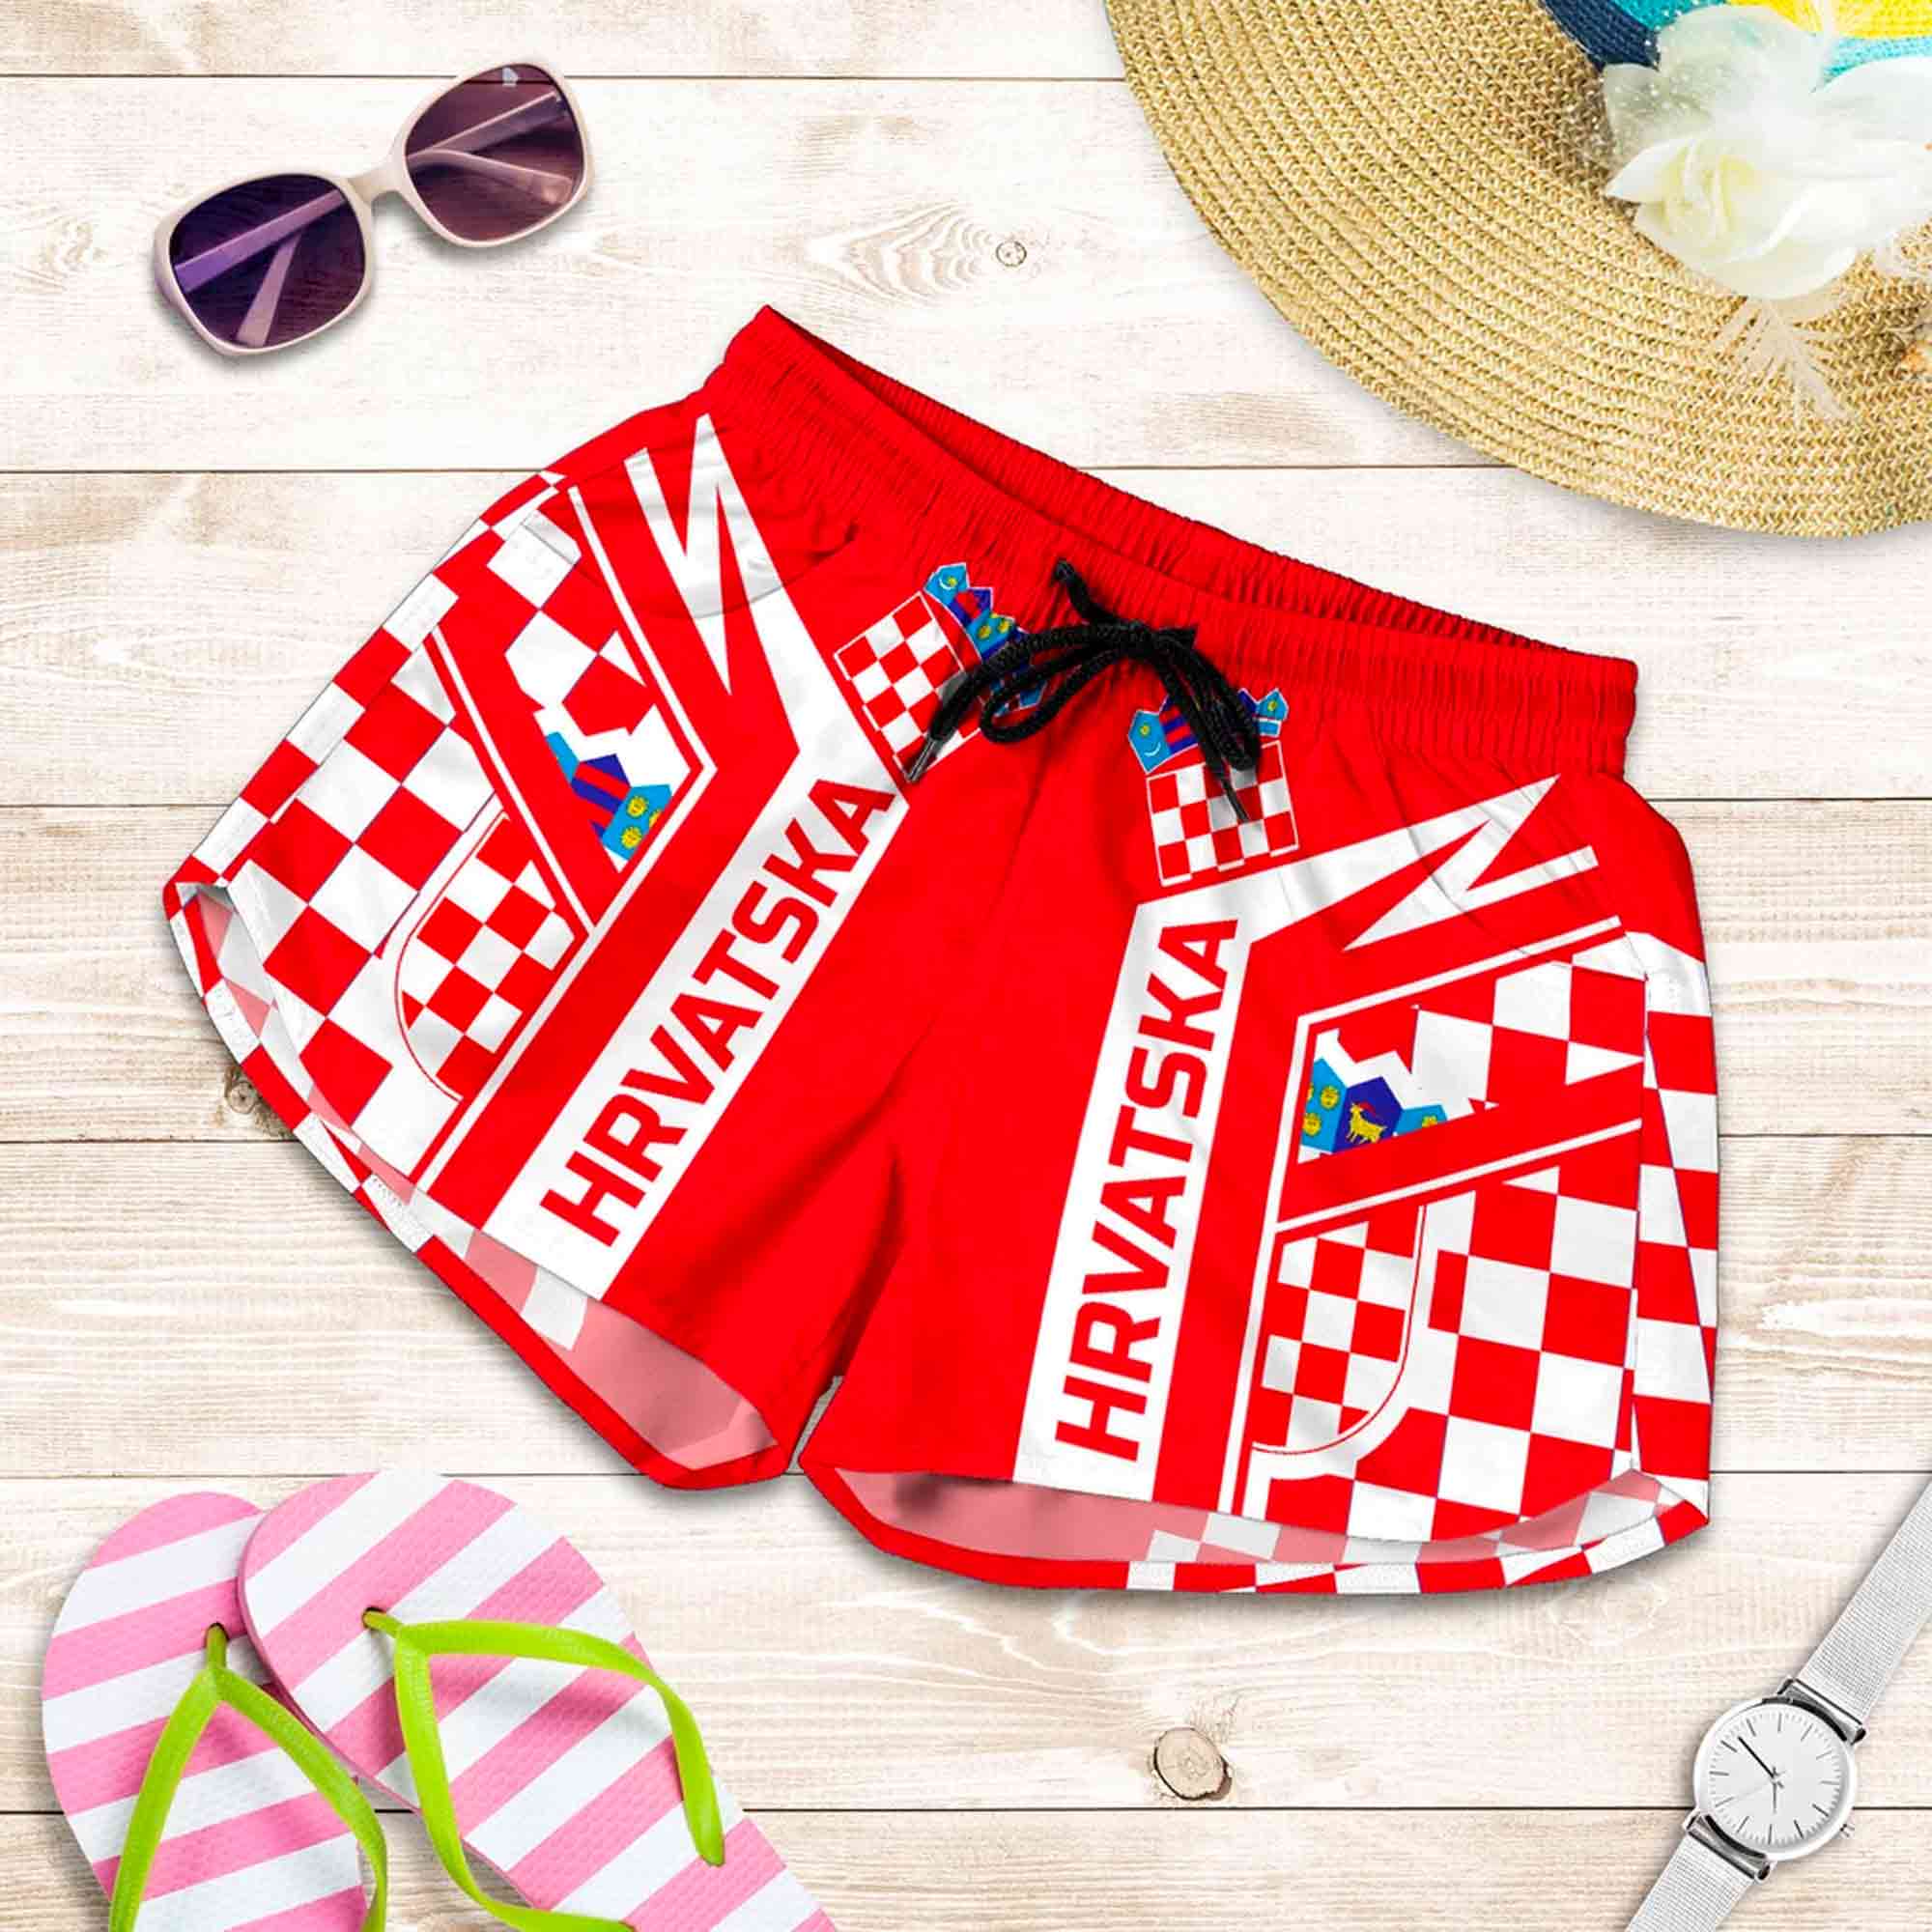 croatia-hrvatska-air-shorts-for-women-red